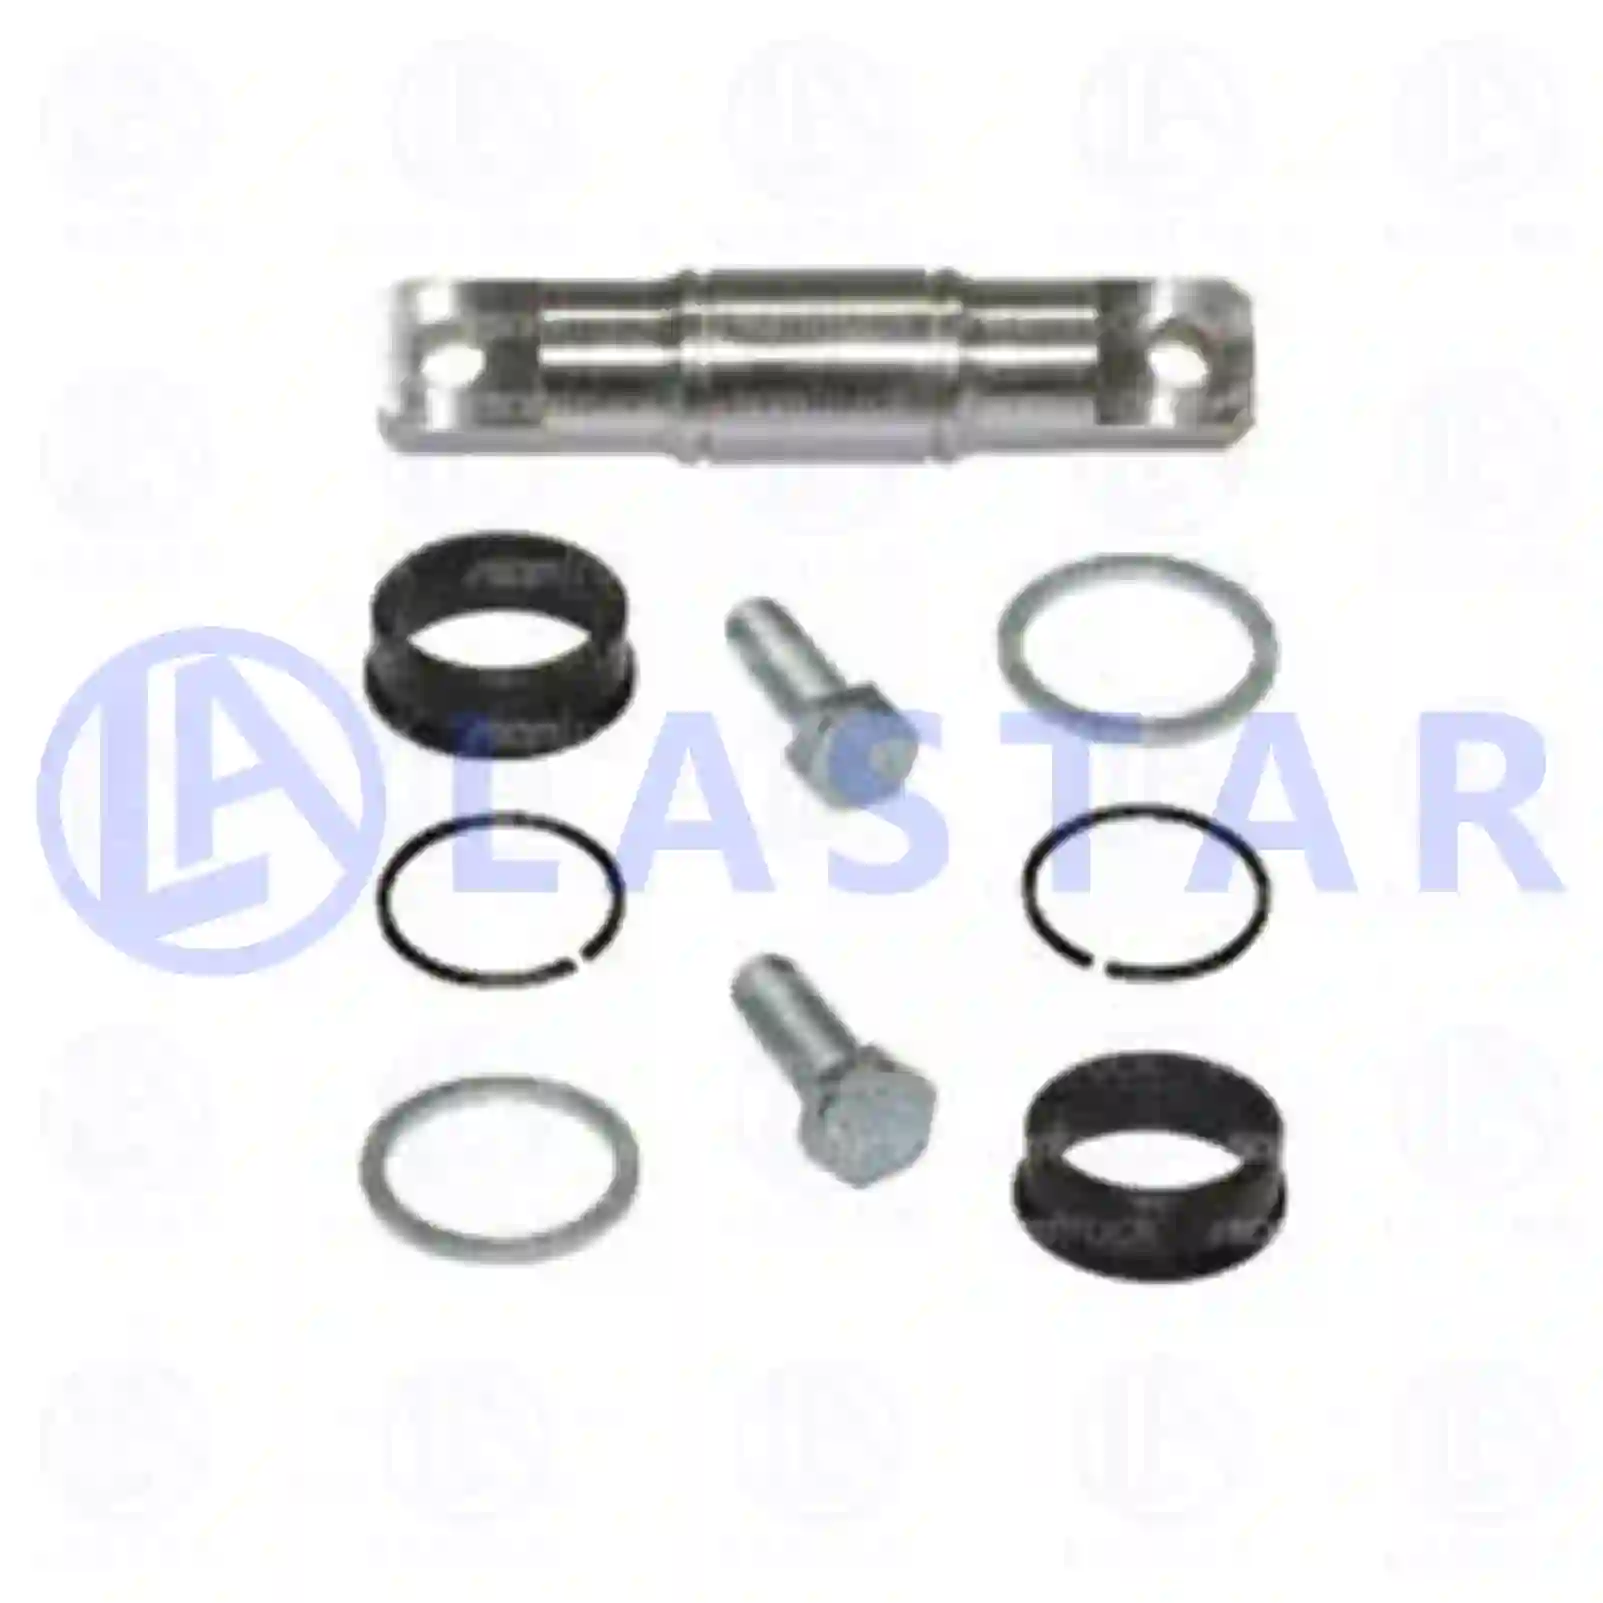  Repair kit, release shaft || Lastar Spare Part | Truck Spare Parts, Auotomotive Spare Parts